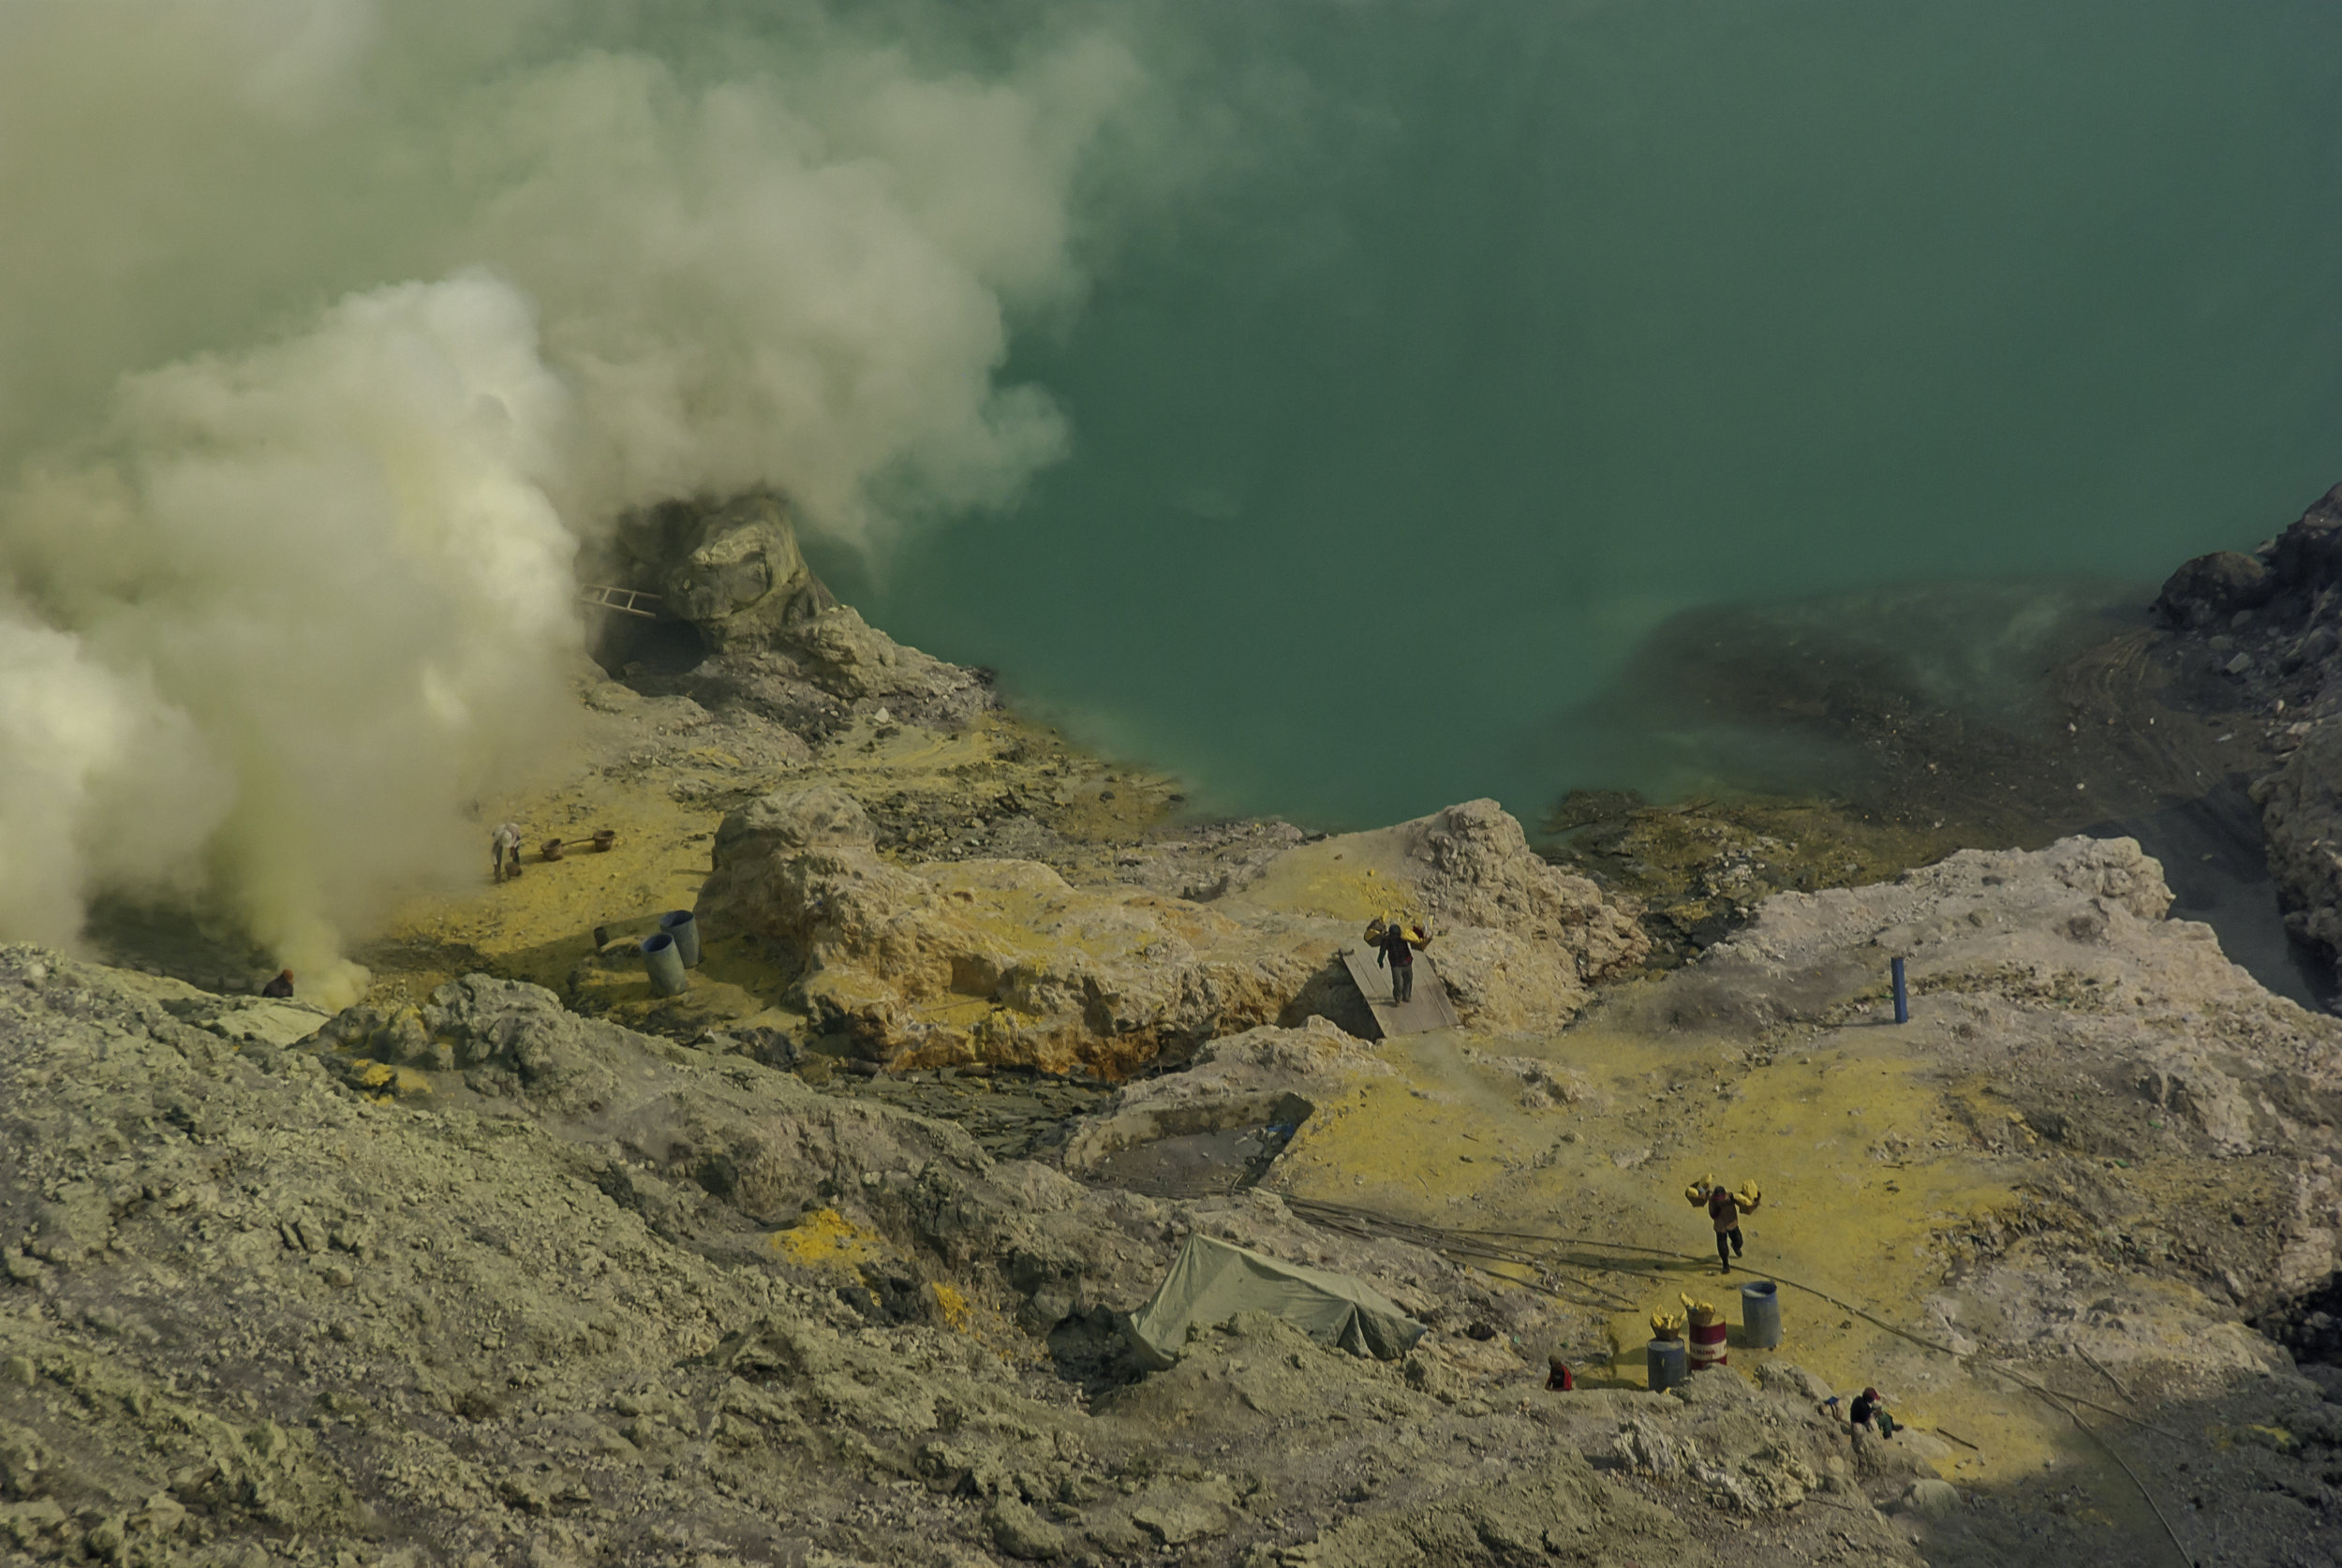 Kawah Ijen Volcano, East Java, Indonesia